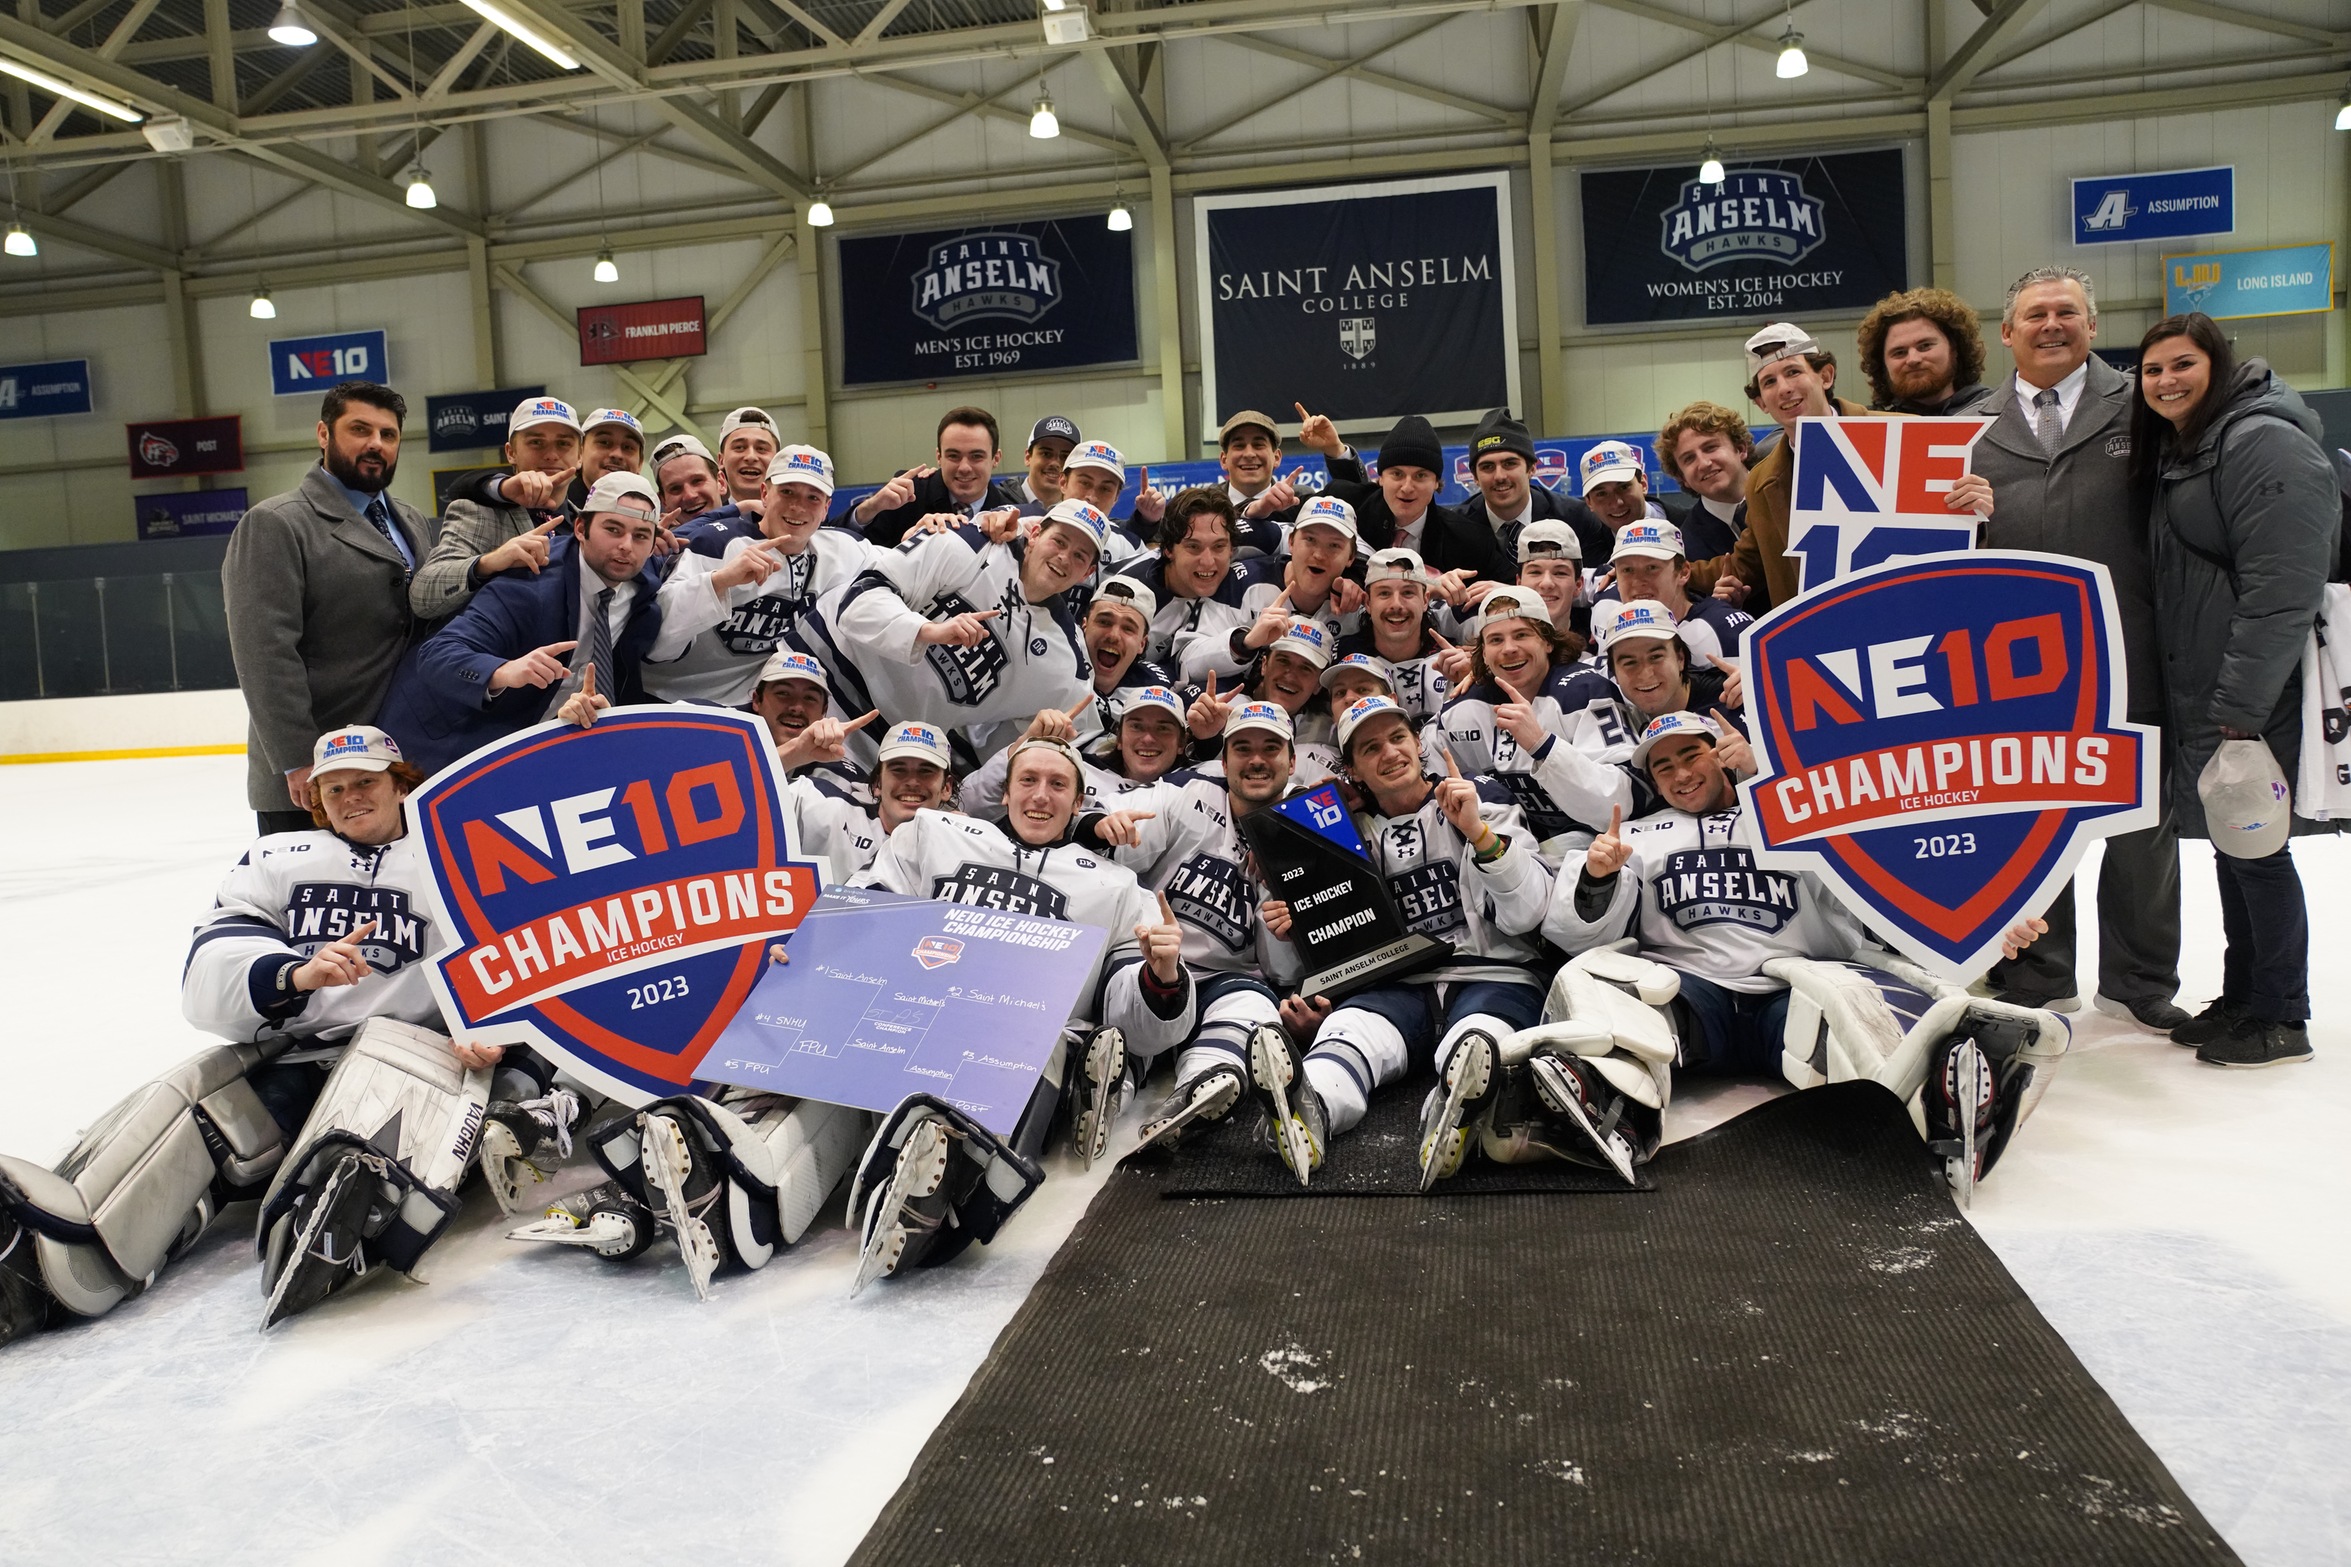 Saint Anselm Clinches NE10 Men's Ice Hockey Title